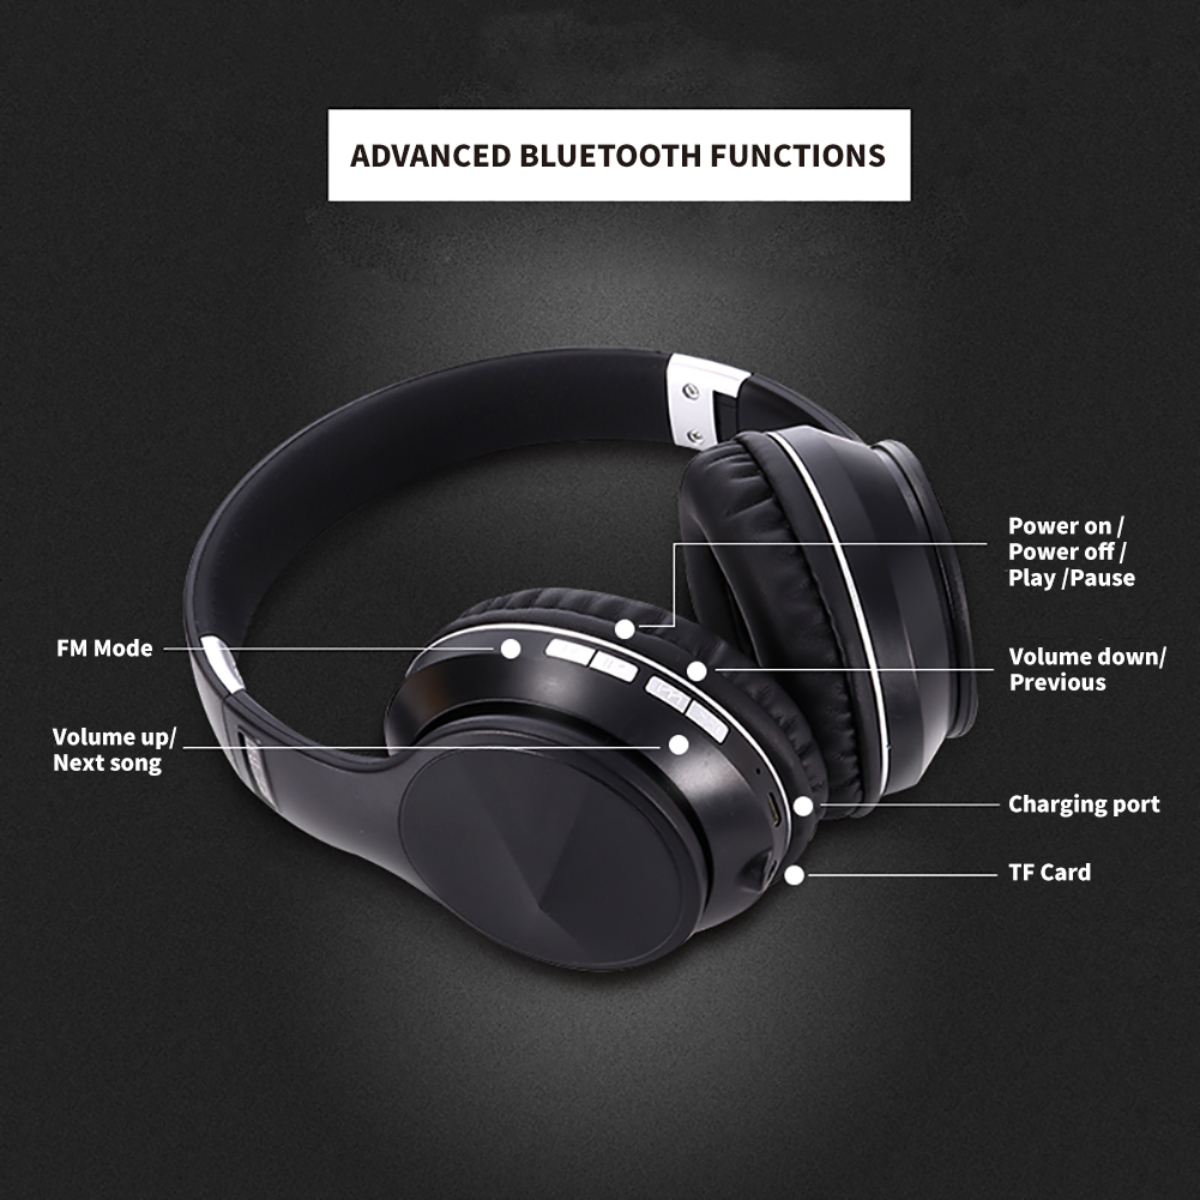 SYNTEK Orange Bluetooth-Kopfhörer Bluetooth-Headset - faltbar, orange kabelloses Over-ear Bass-Stereoklang, Bluetooth Kopfbügel